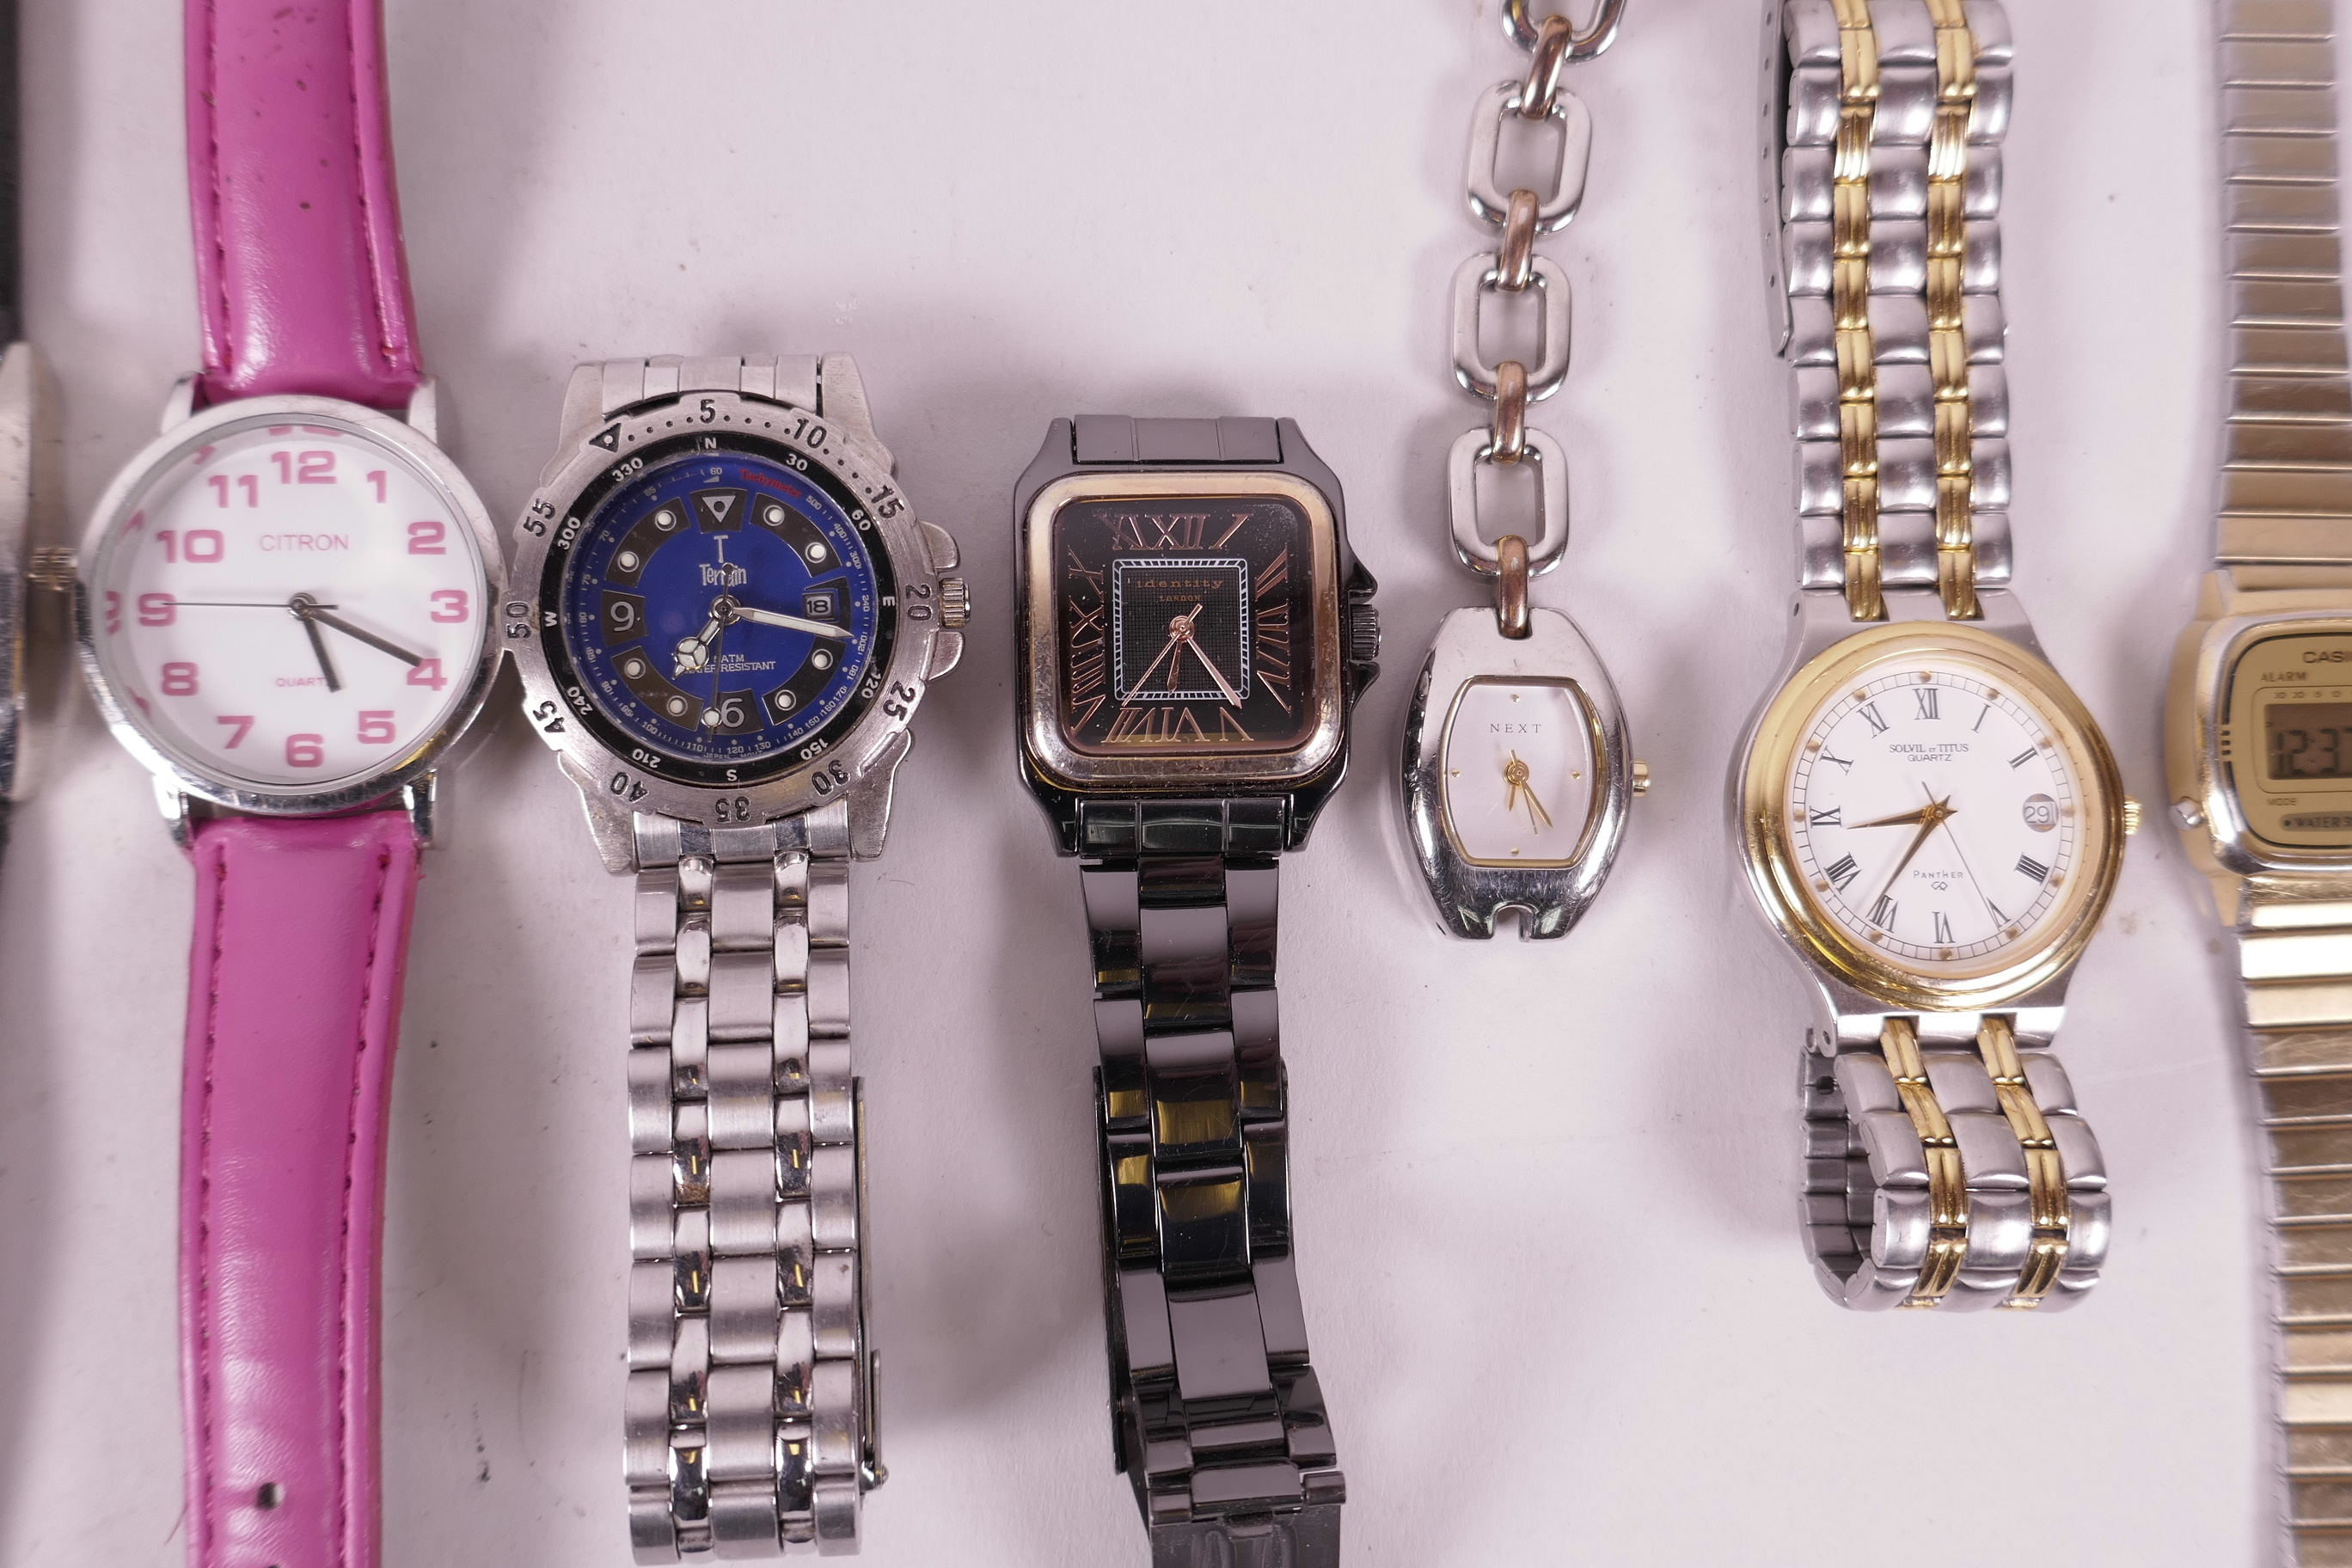 A quantity of ladies' and gentlemen's wristwatches including Casio, Limit, Citron, Terrain, Stegmann - Image 4 of 5